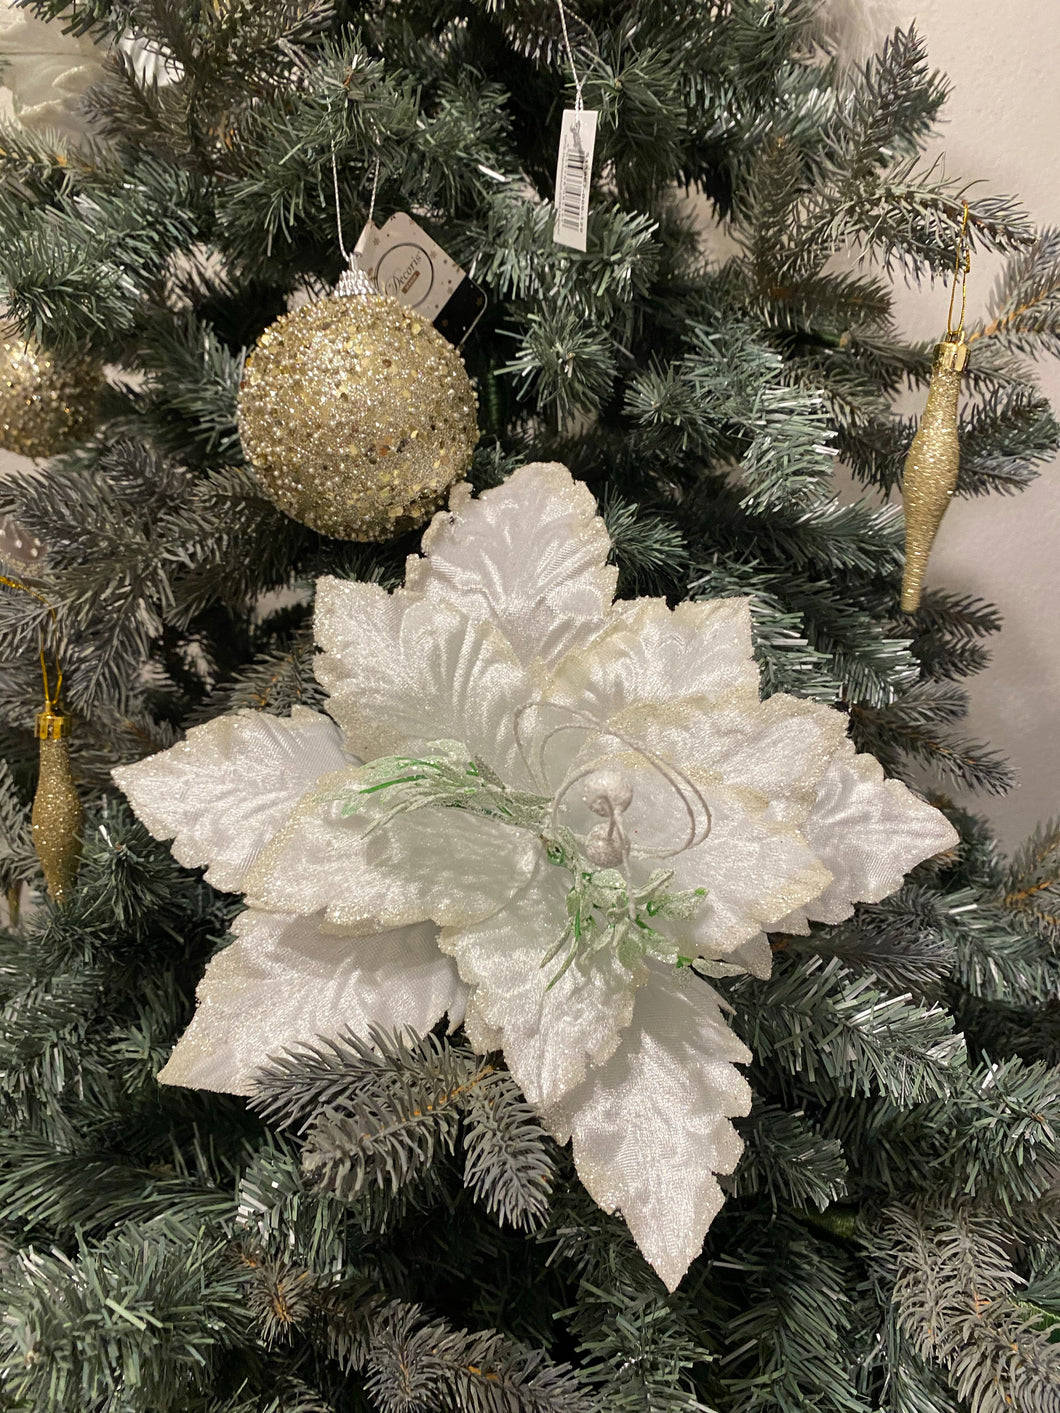 Decorative White Poinsettia Flower